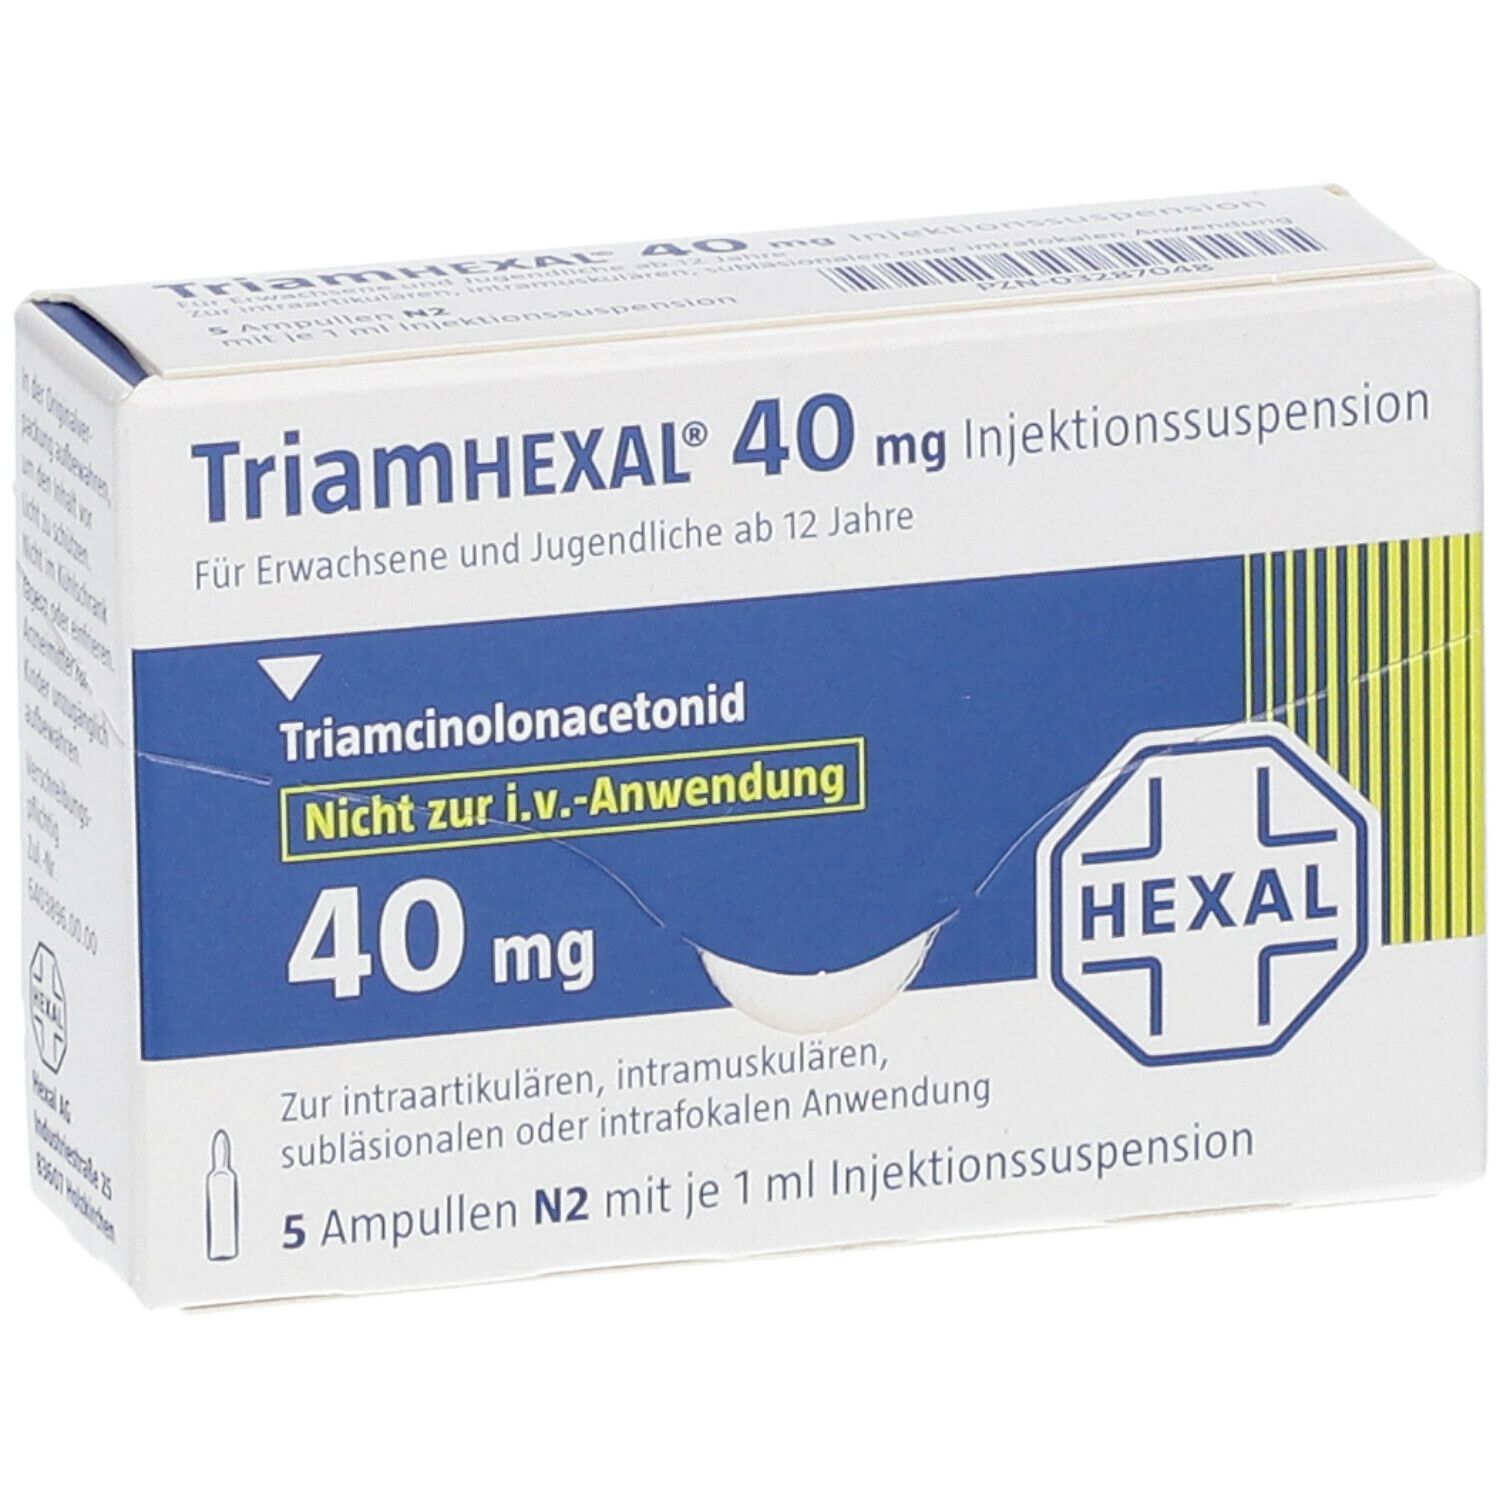 Hexal. Гексал фото таблетки. Таблетки от сердца гексал. Drug Labels Hexal. Тамоксифен гексал таблетки цены